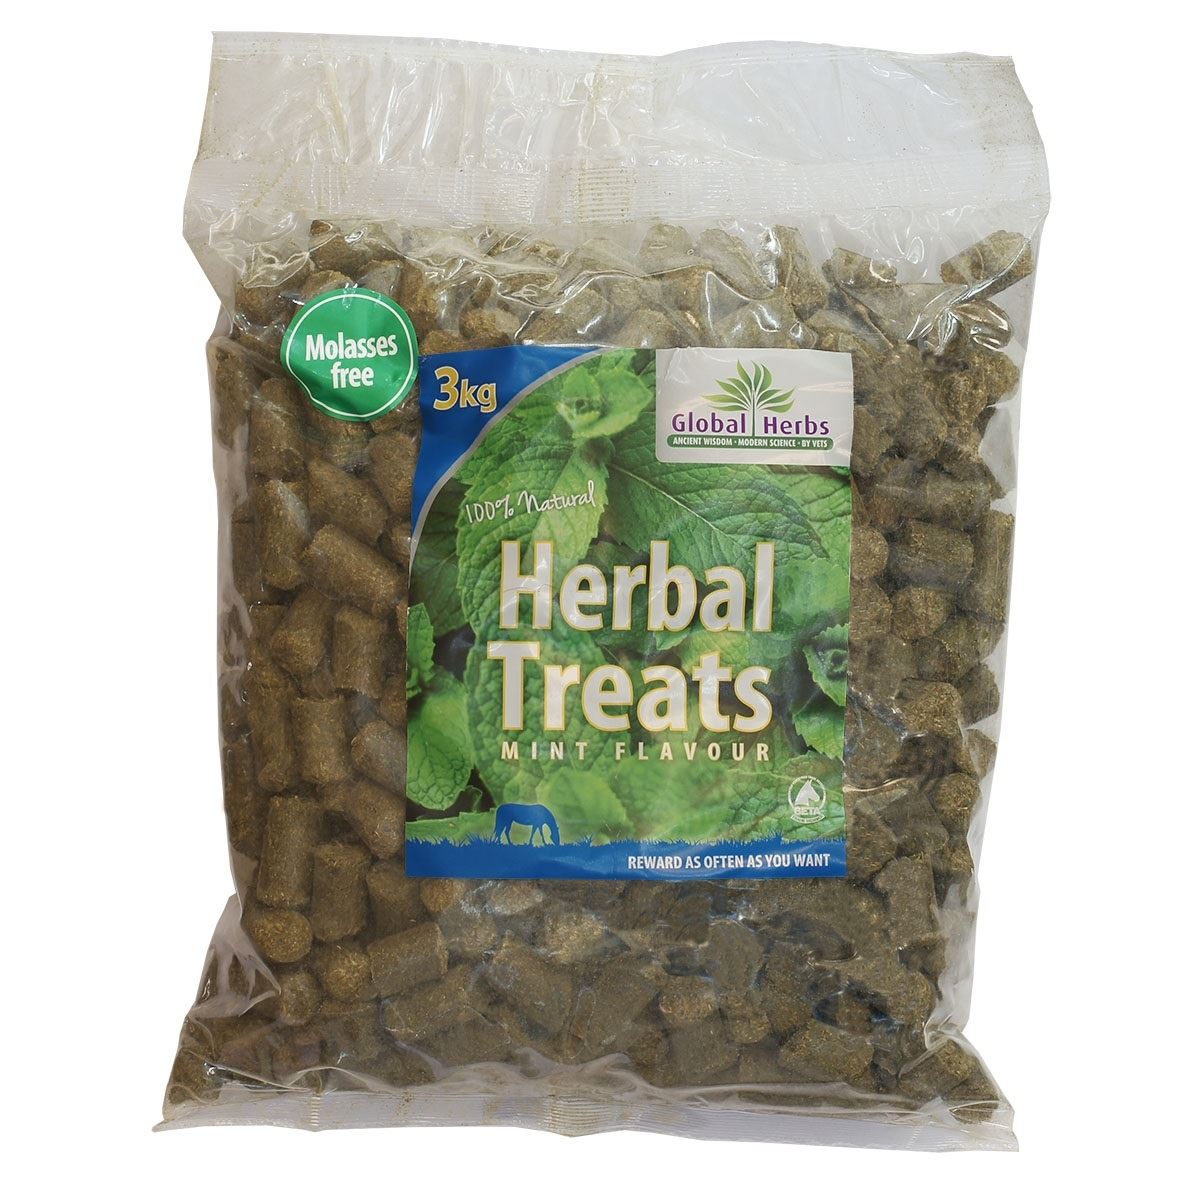 Global Herbs Herbal Treats Mint - Just Horse Riders